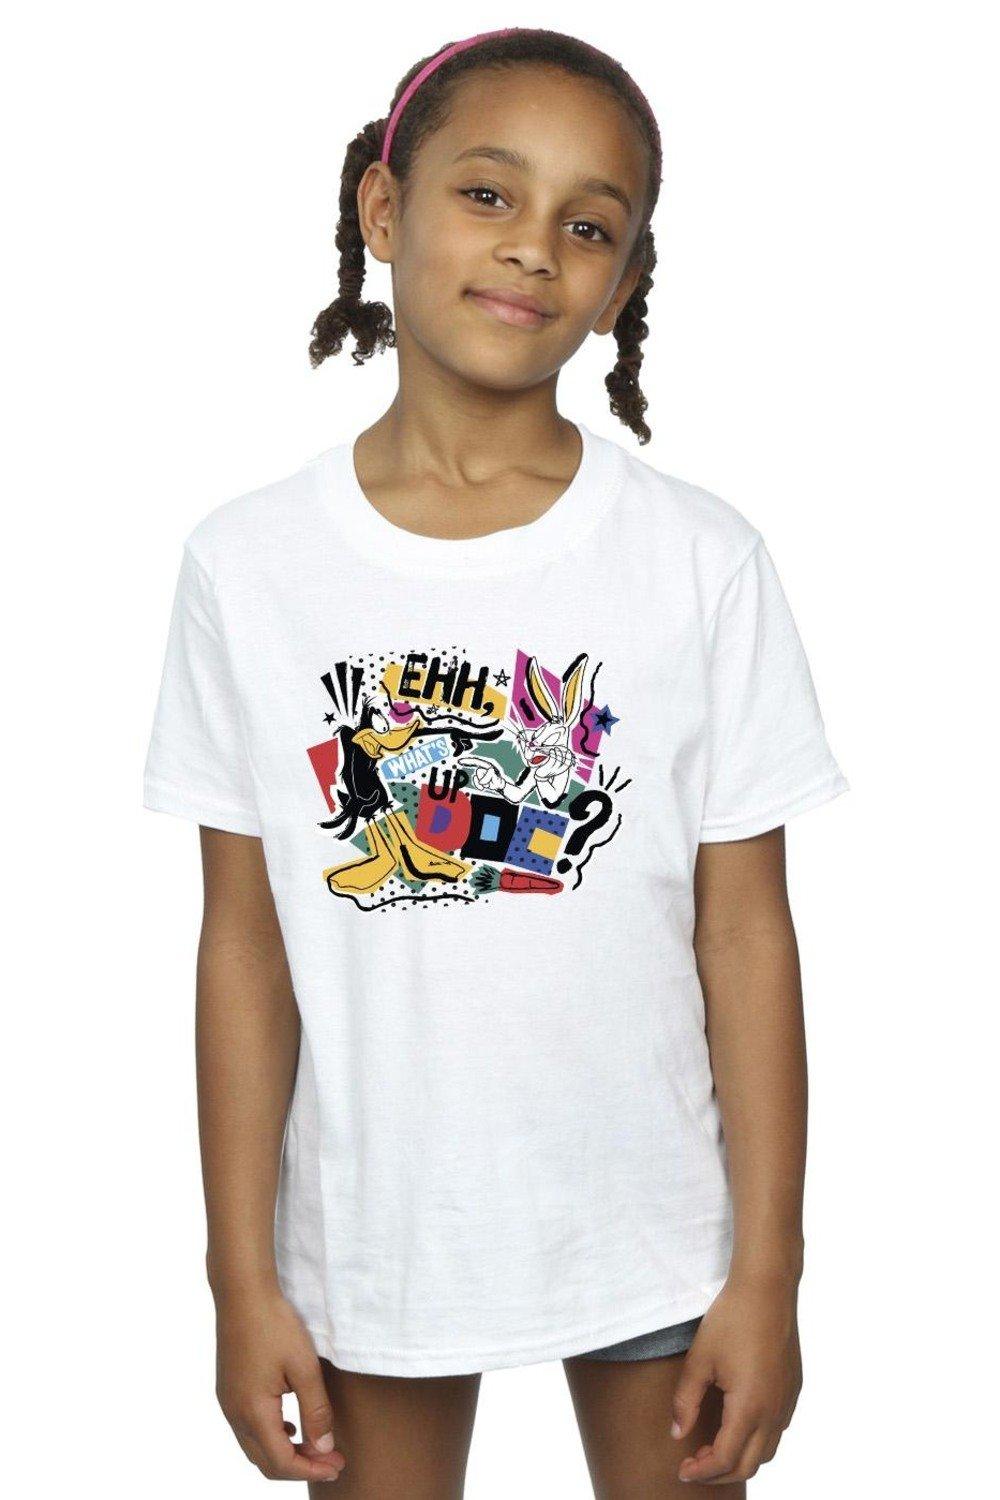 What’s Up Doc Pop Art Cotton T-Shirt